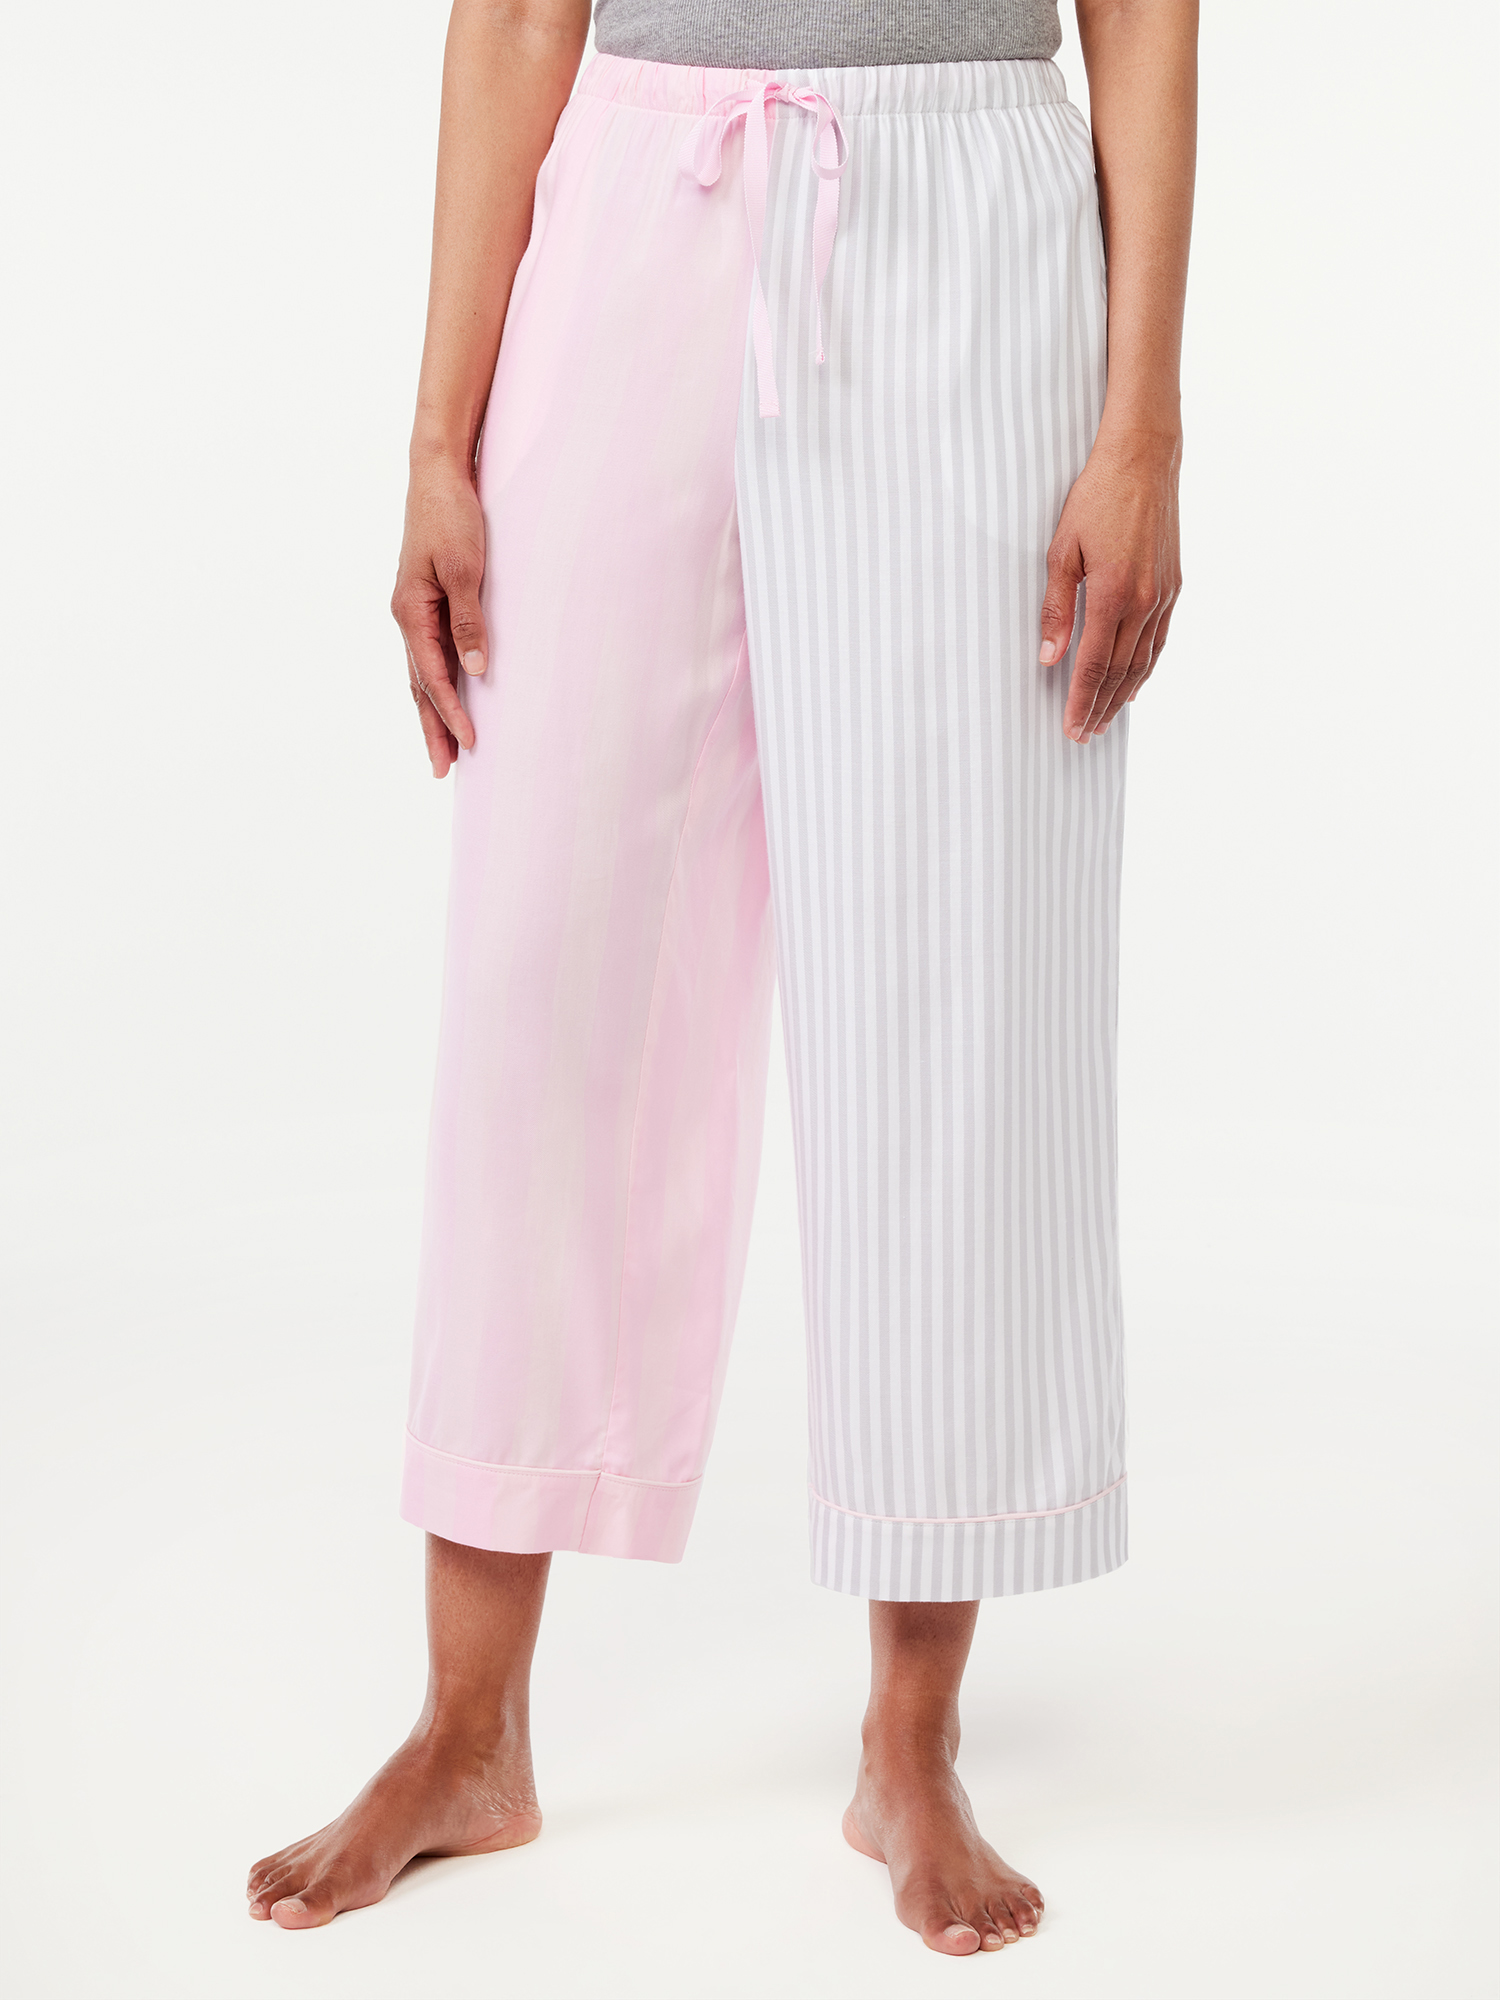 Joyspun Women's Woven Cropped Pajama Pants, Sizes S to 3X - image 1 of 5